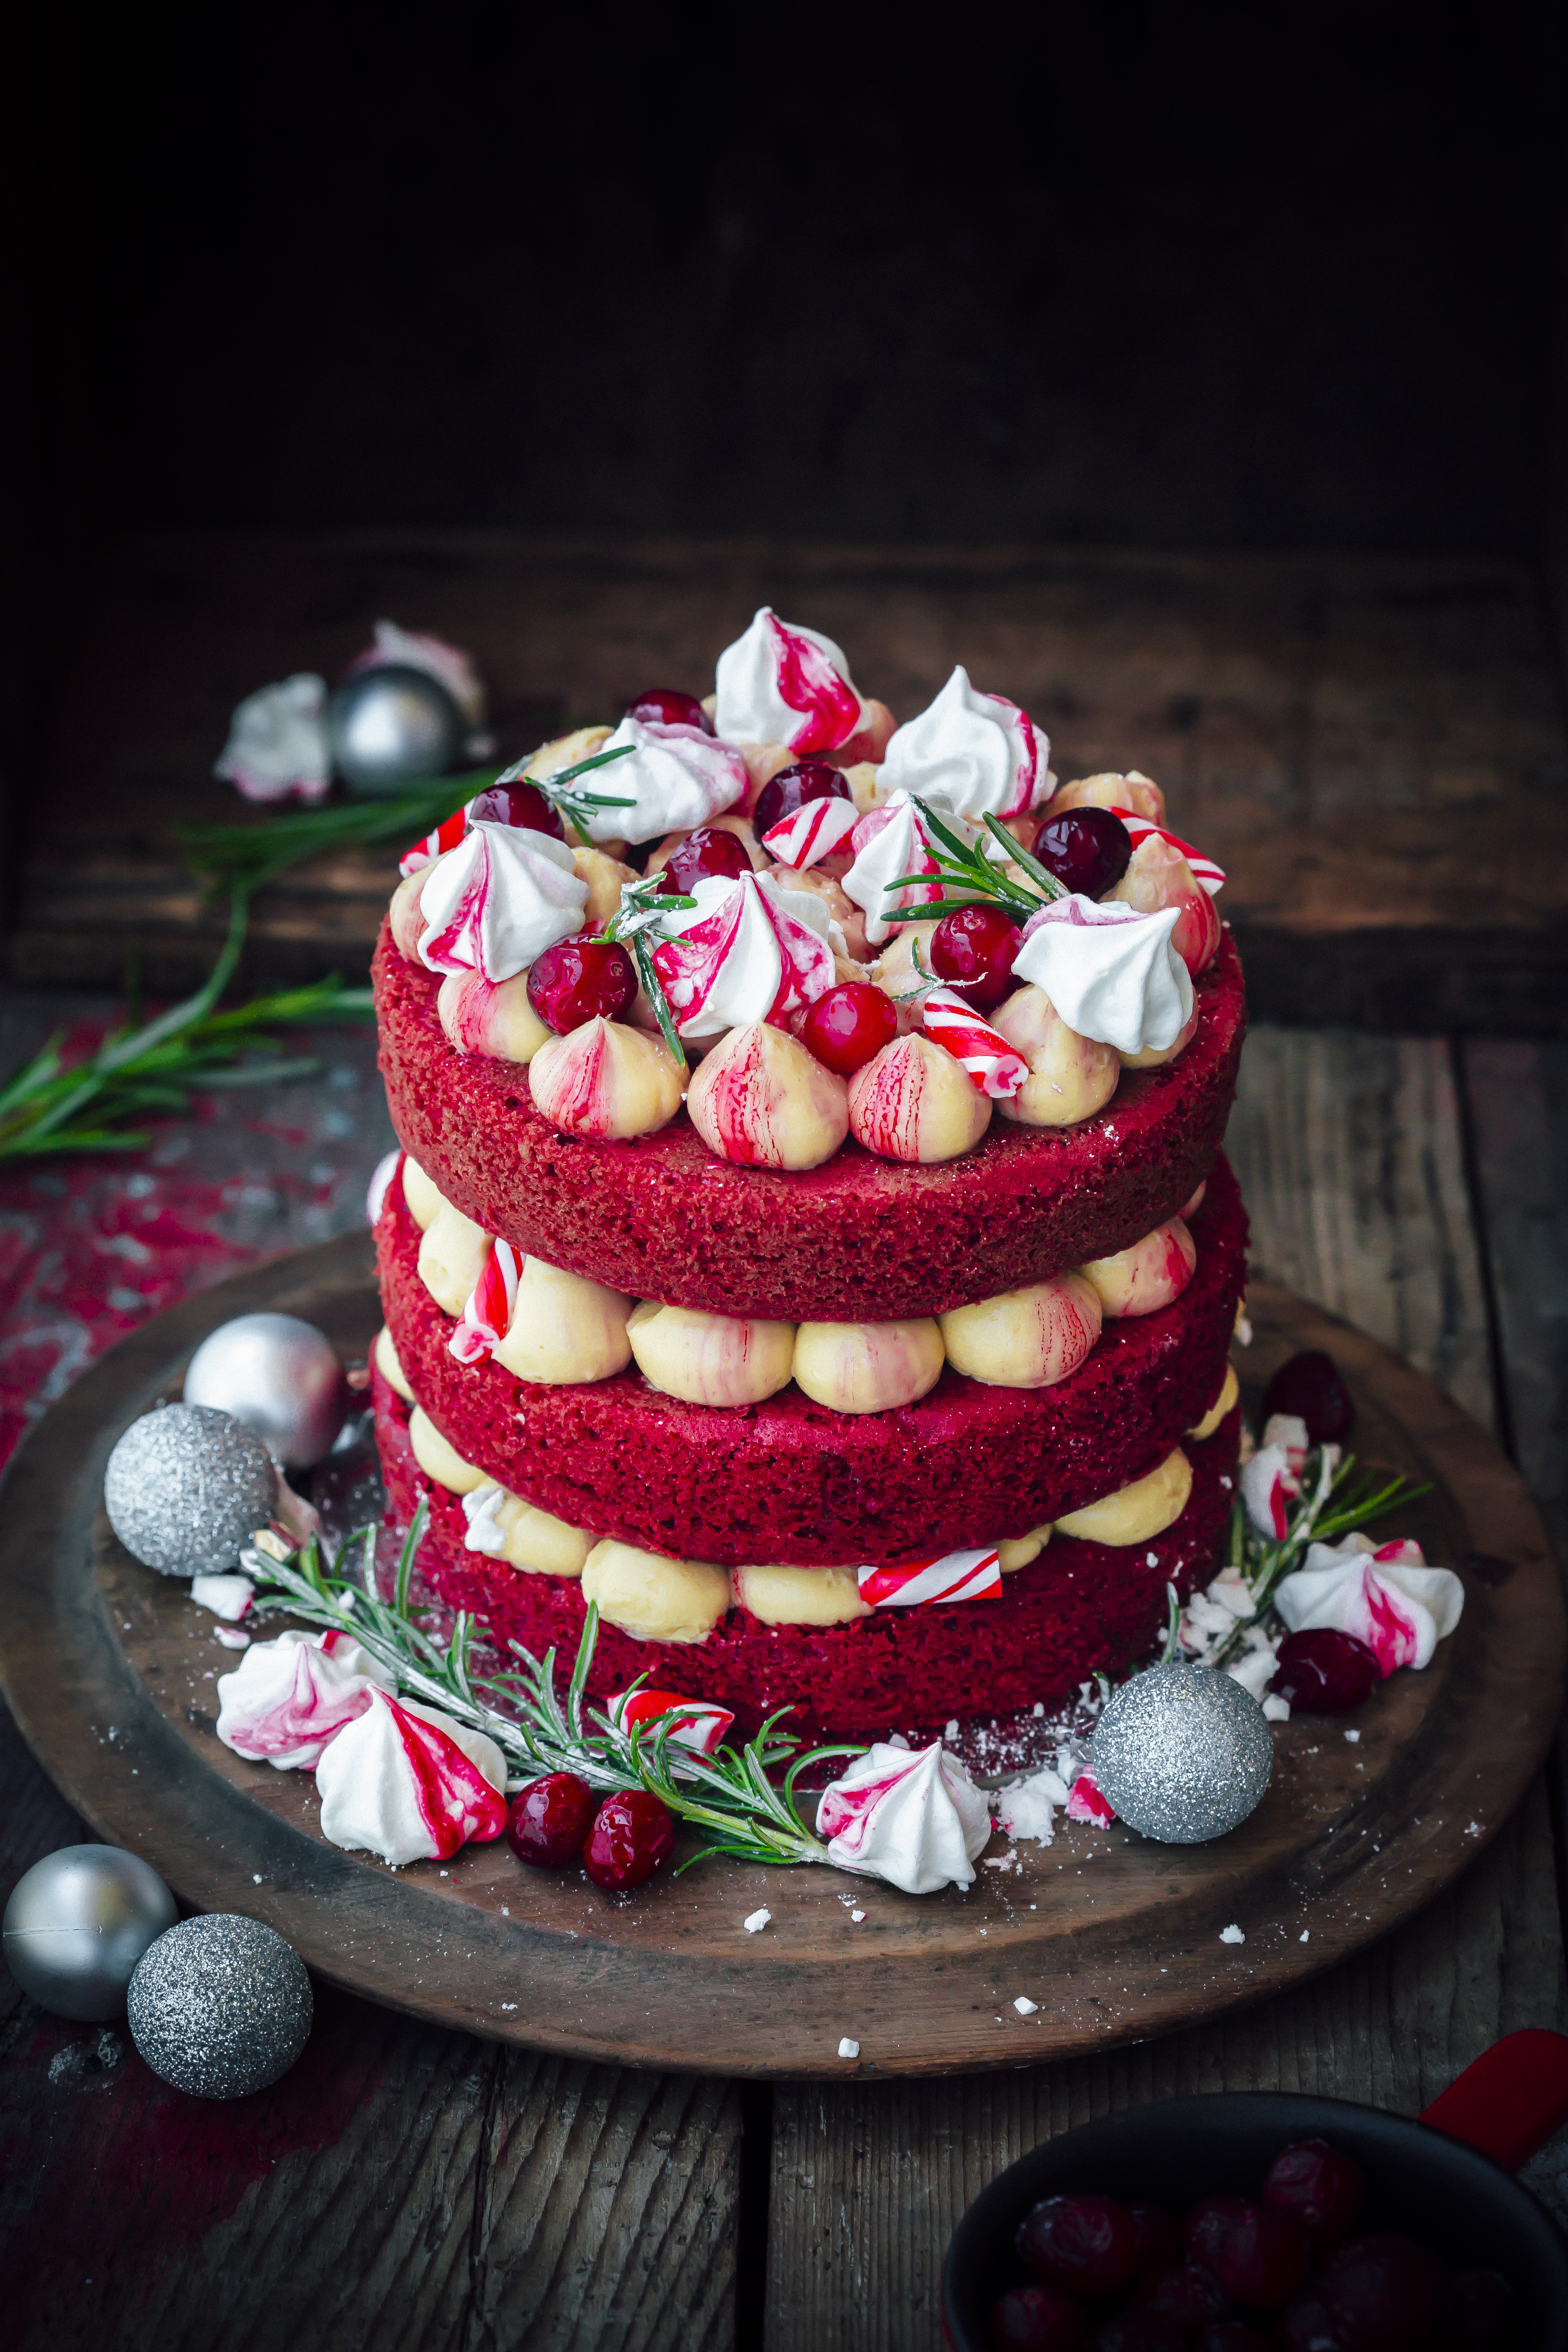 Red Velvet Christmas Cake With CSR Sugar - Sugar et al